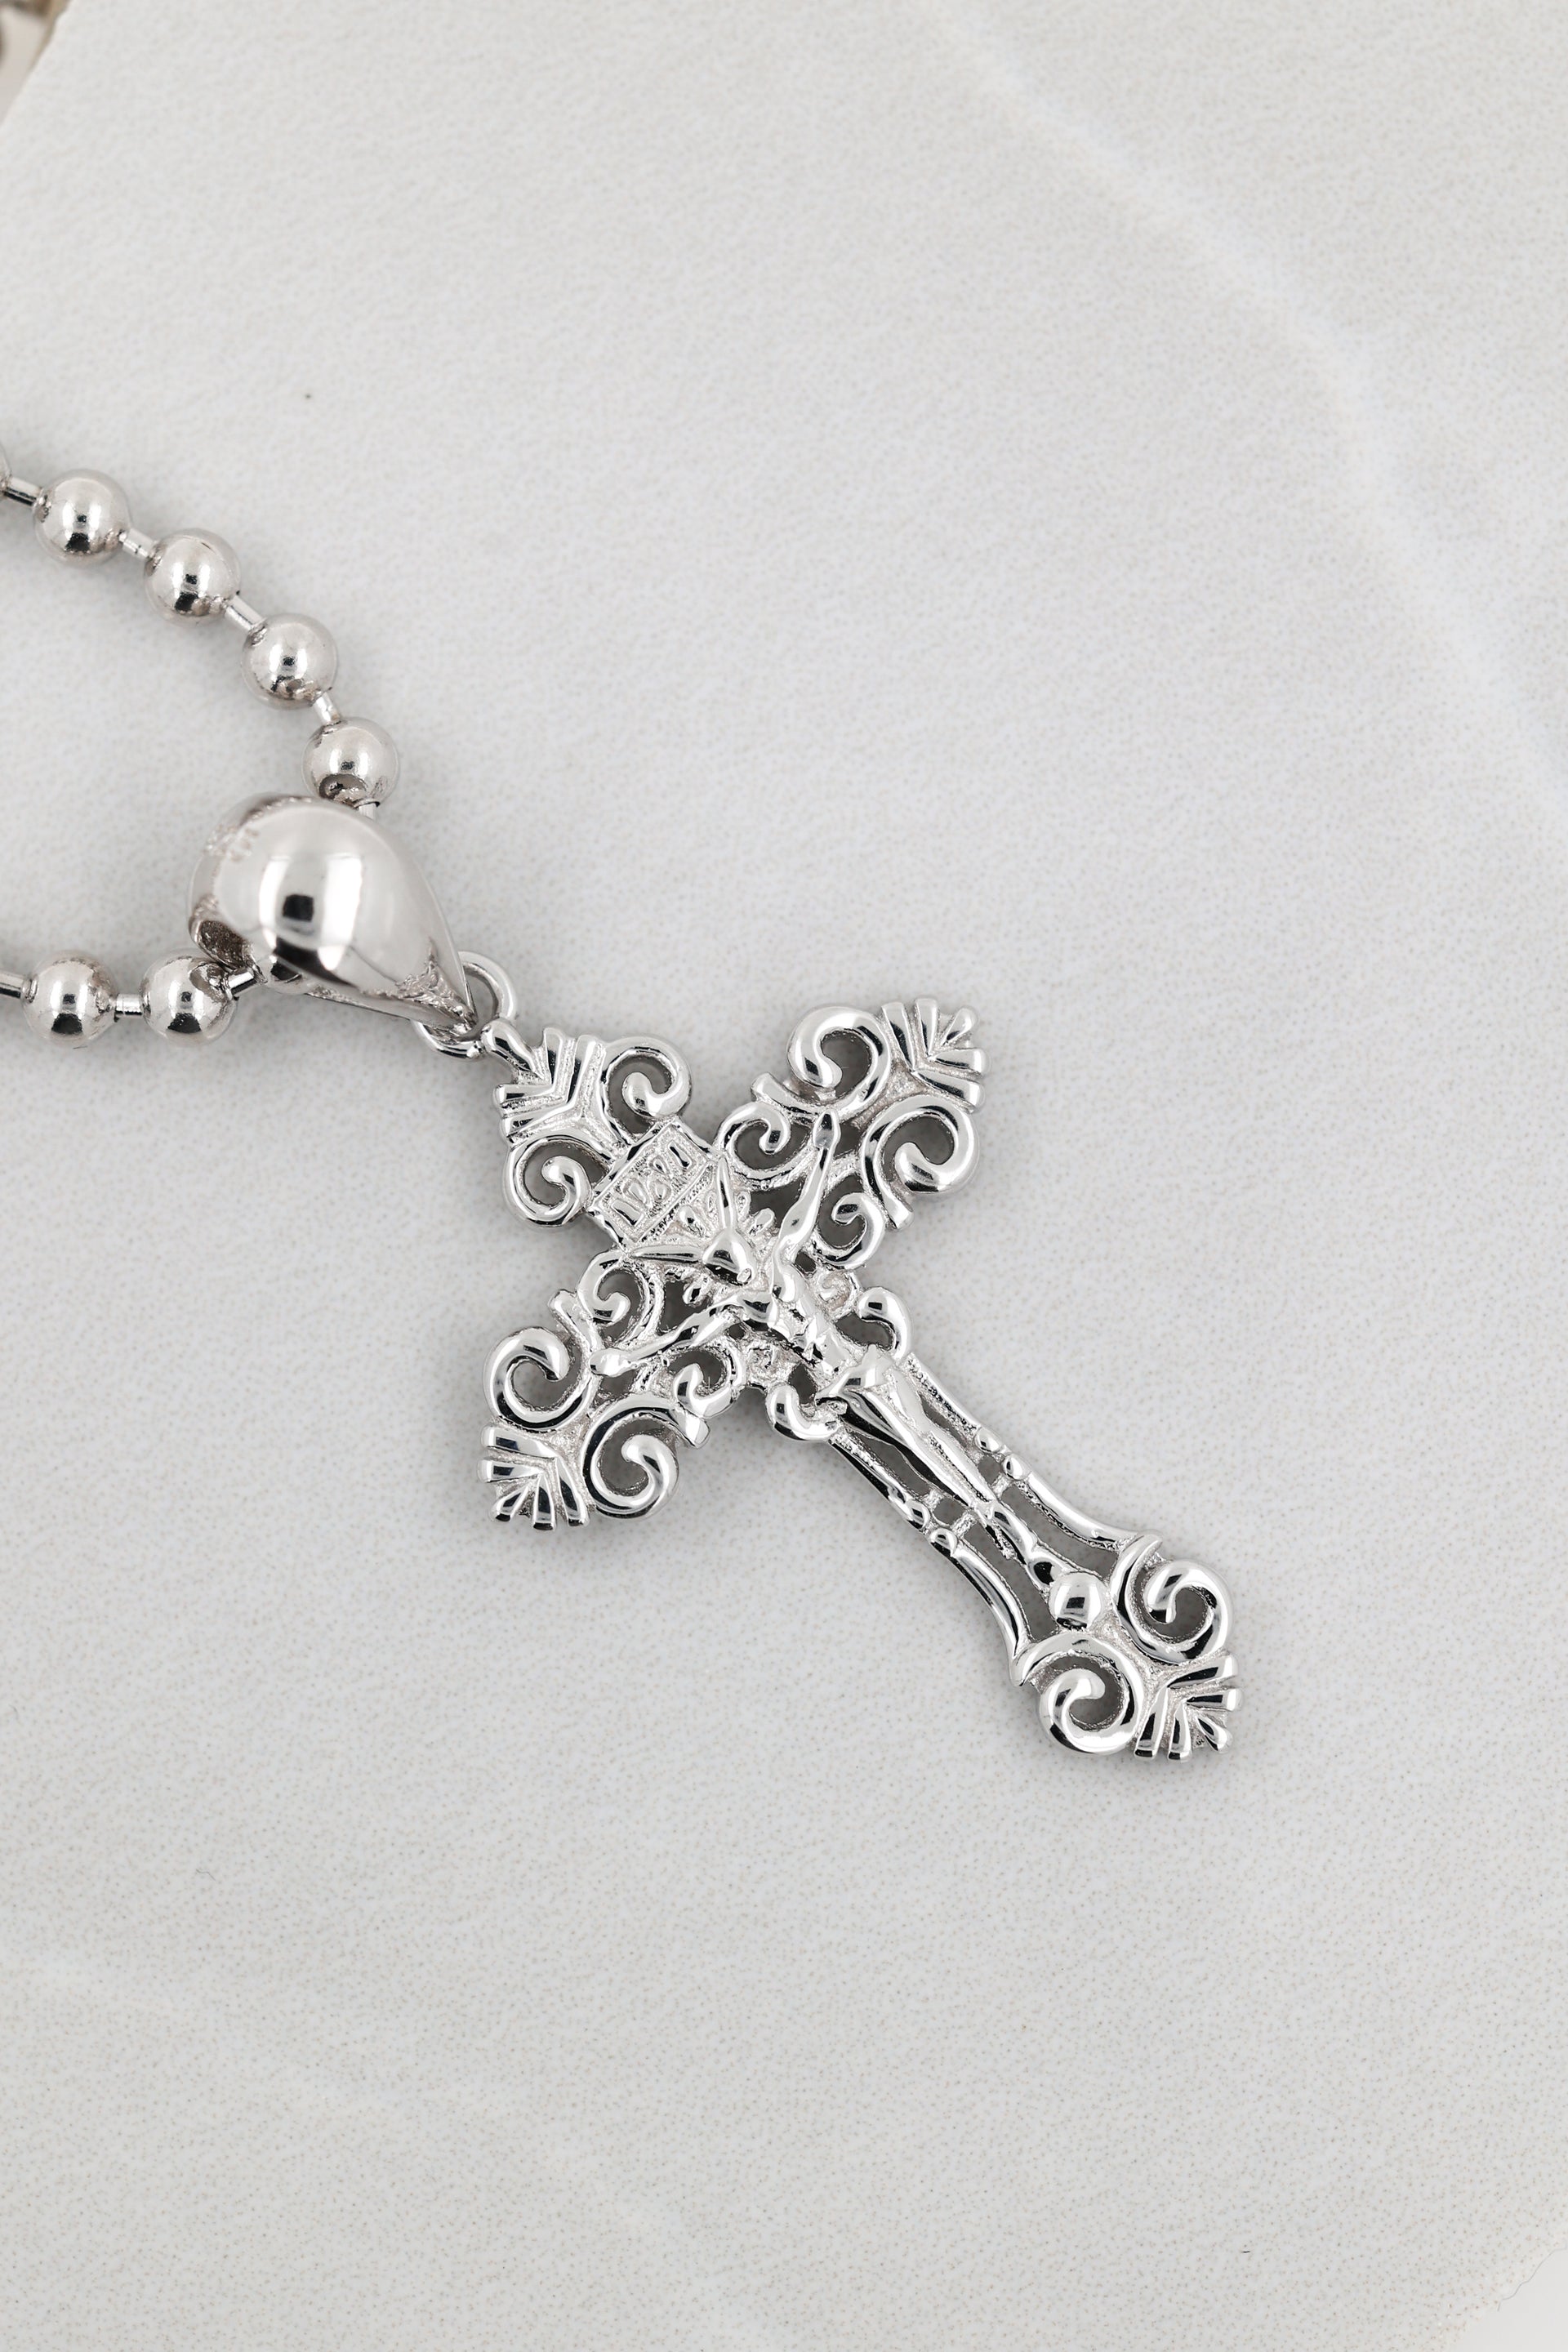 .925 silver crucifix pendant